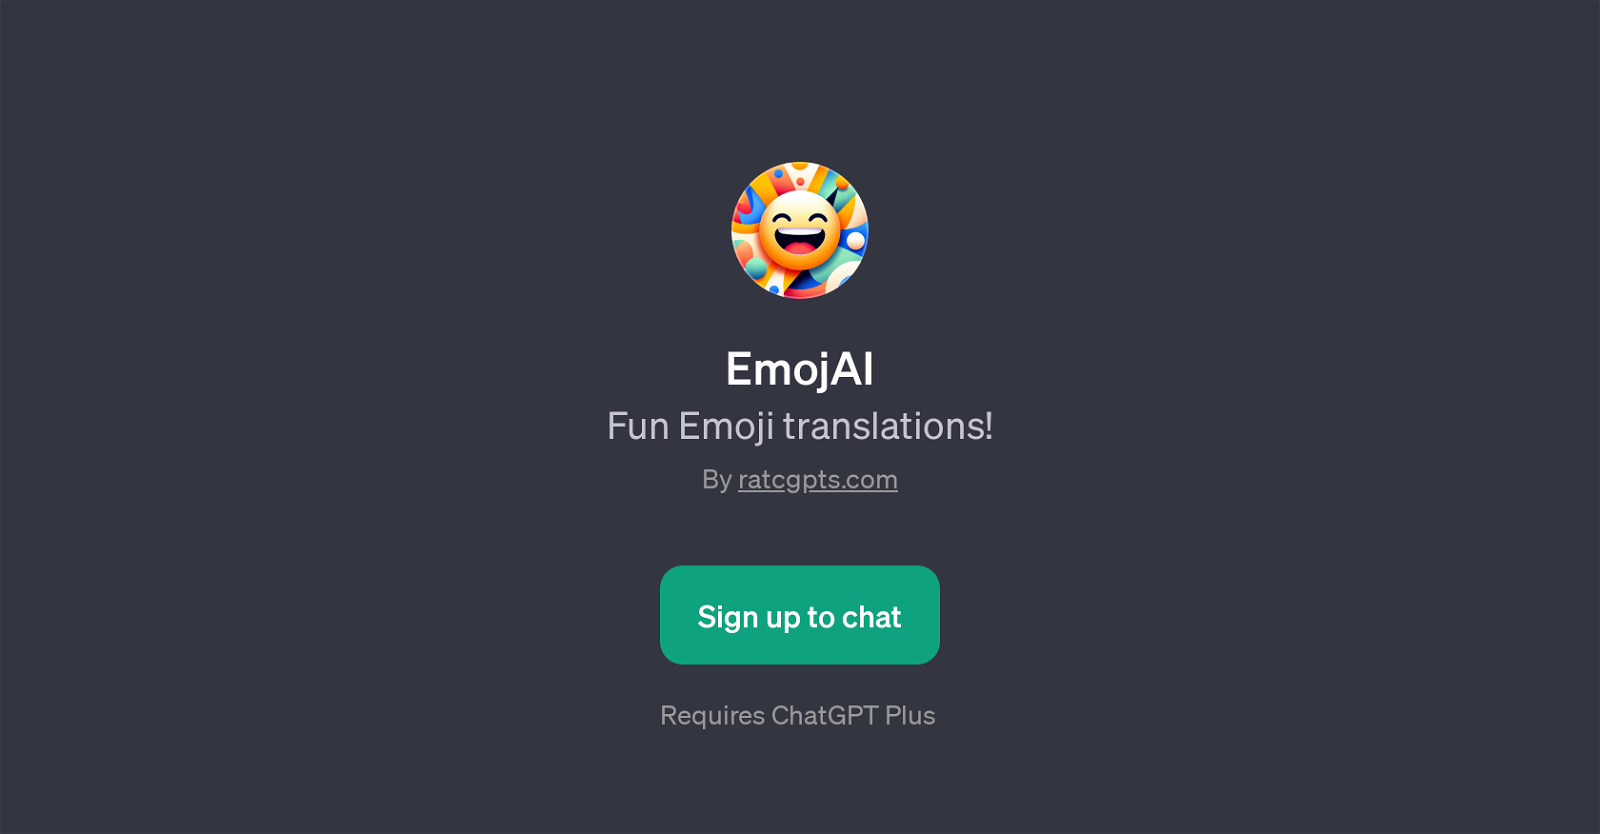 EmojAI website